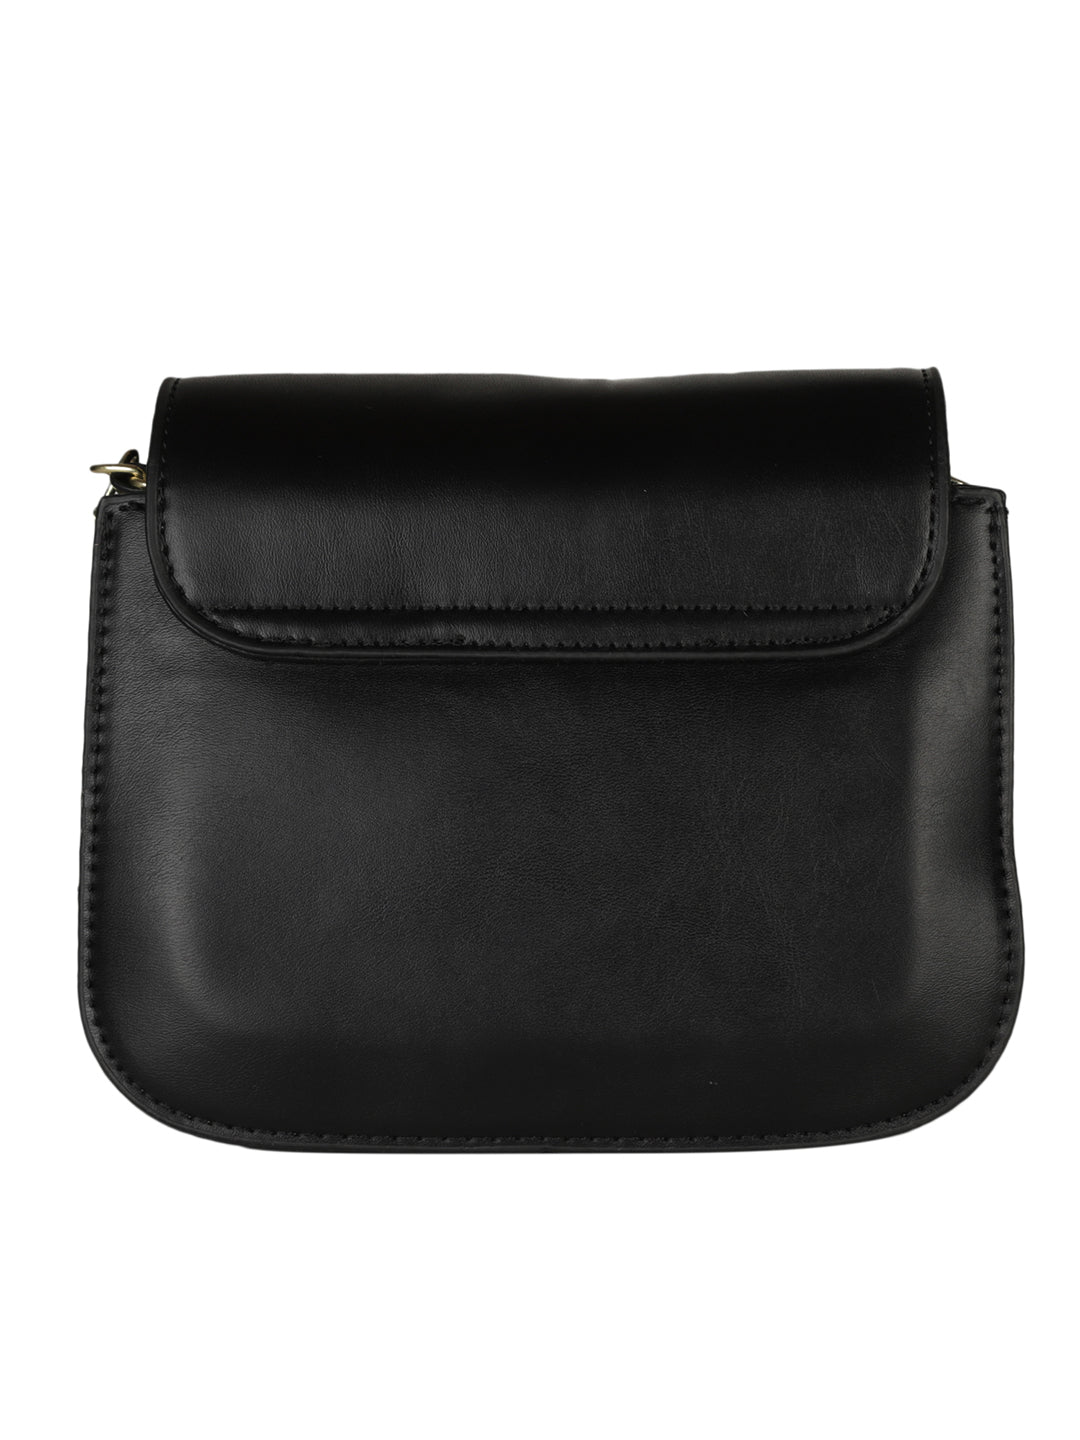 MINI WESST Women's Black Sling Bag(MWHB122BL)